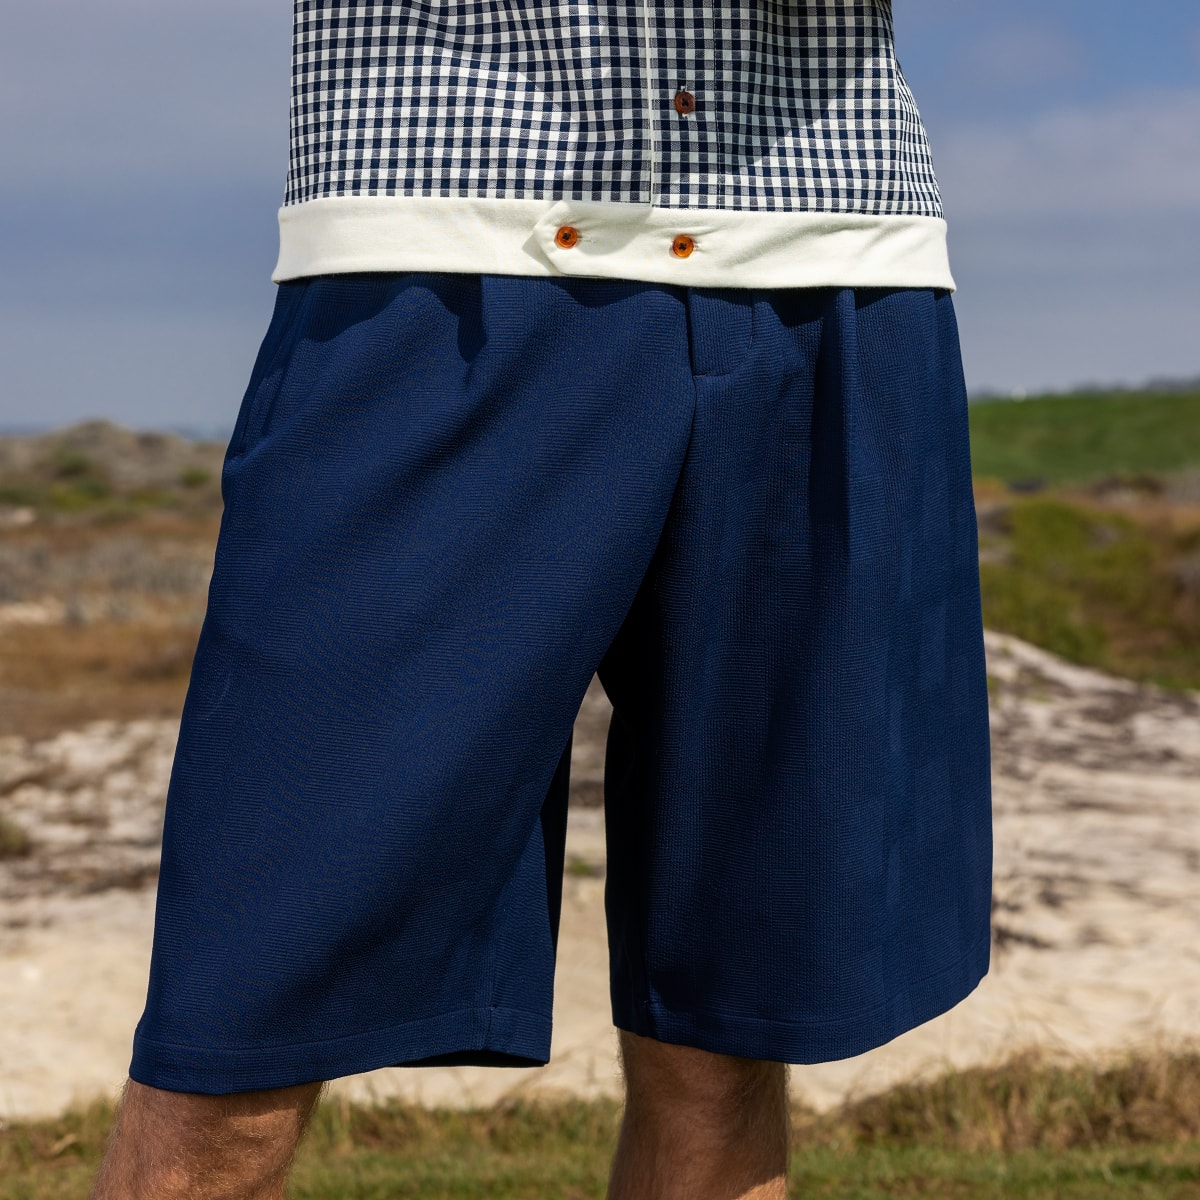 Adidas Malbon Shorts. 8